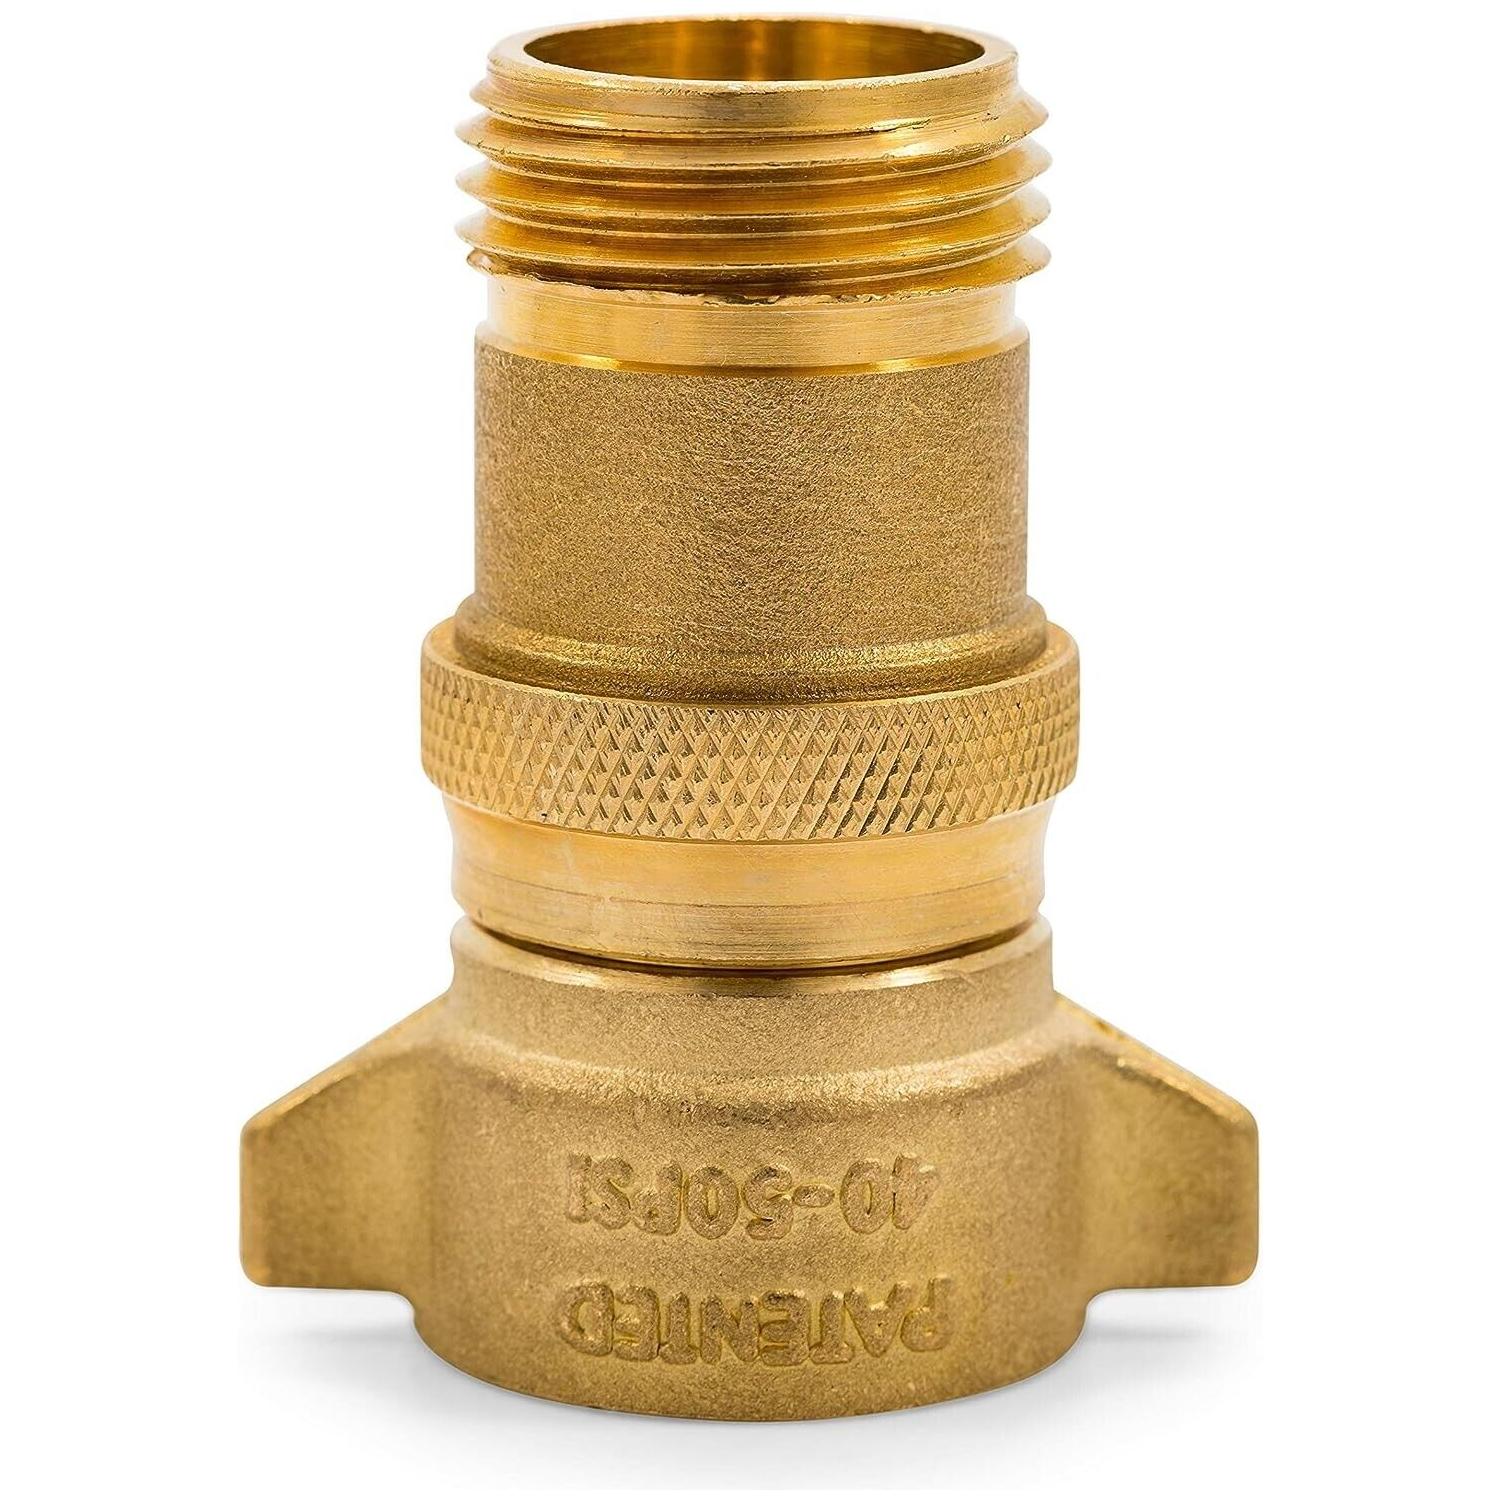 Camco Brass Water Pressure Regulator 40055